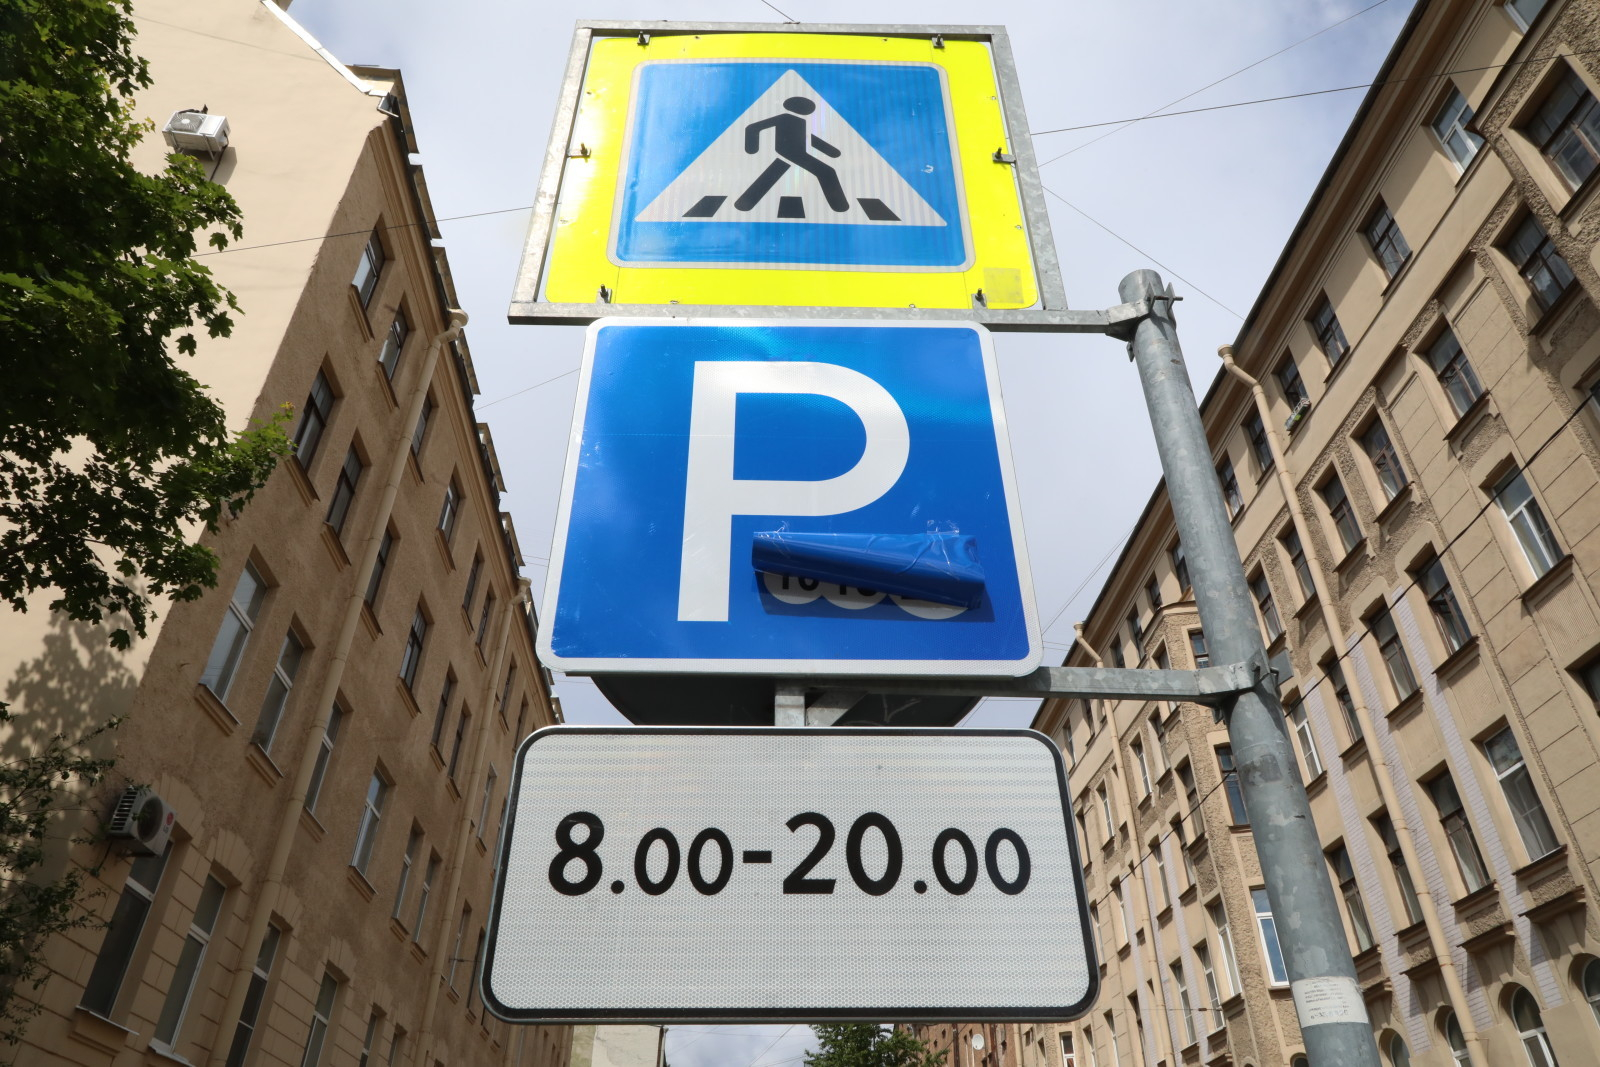 парковка машина автомобиль улица дорога знак оплата разметка стоянка платная парковка